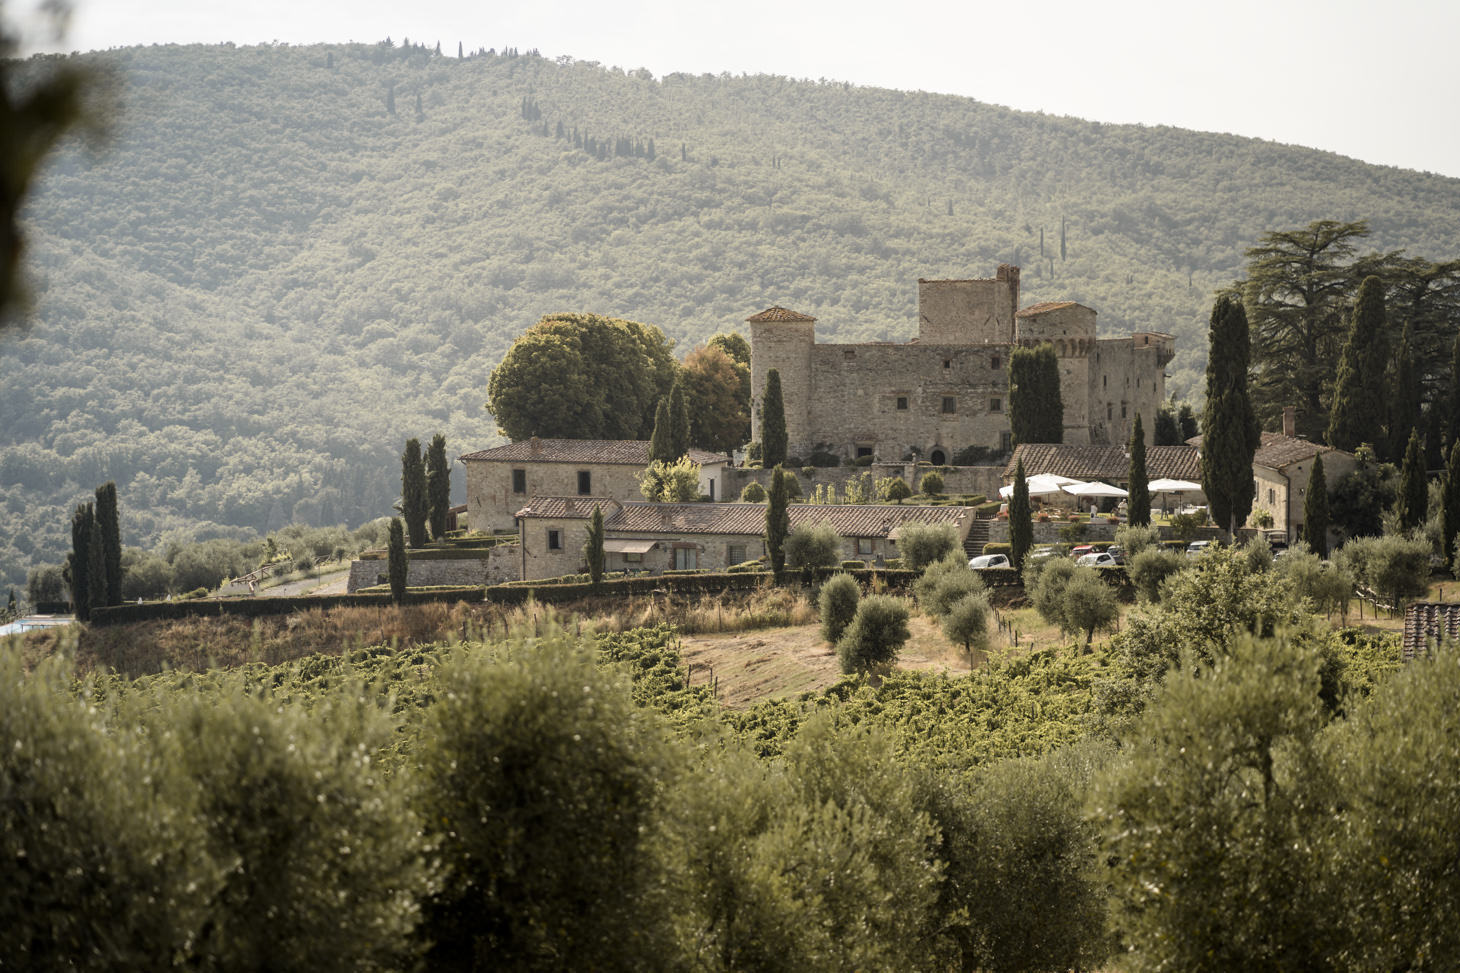 Castello di Meleto for weddings in Tuscany